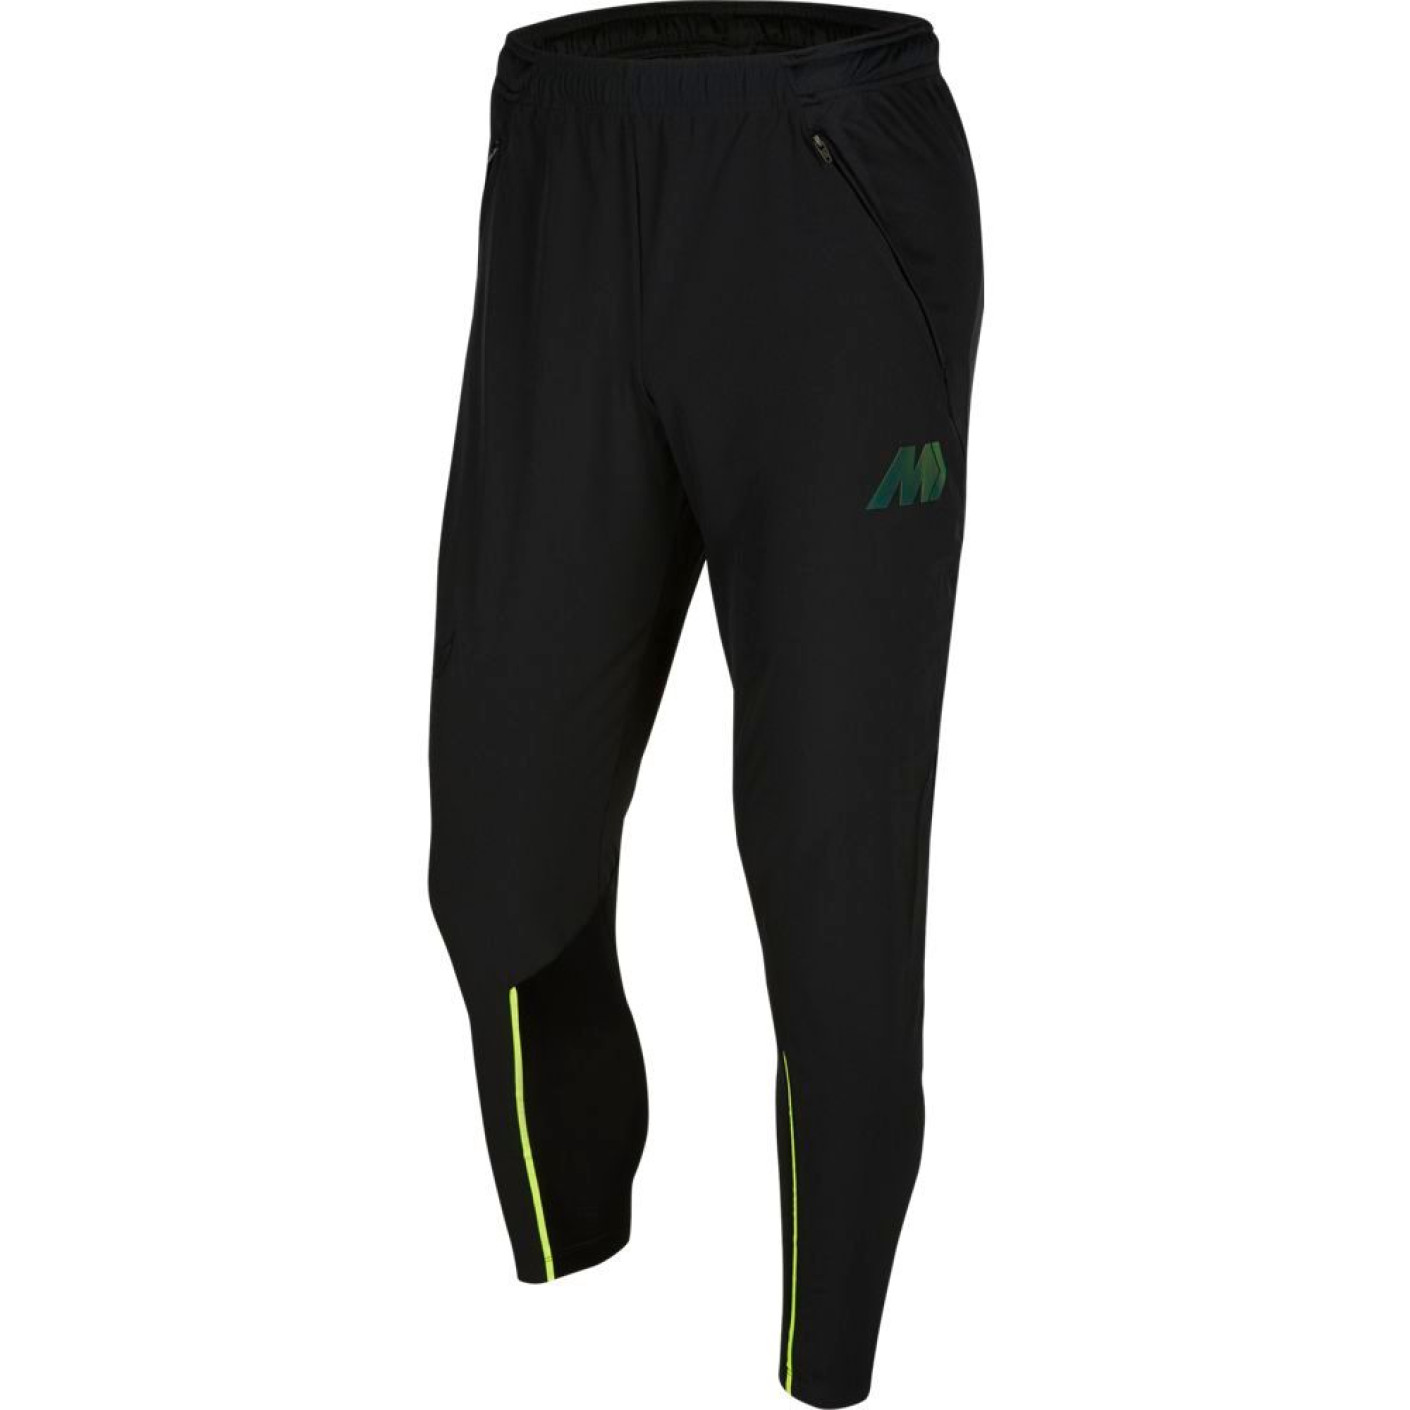 Nike Mercurial Dry Strike Woven Track Pants PZ Black